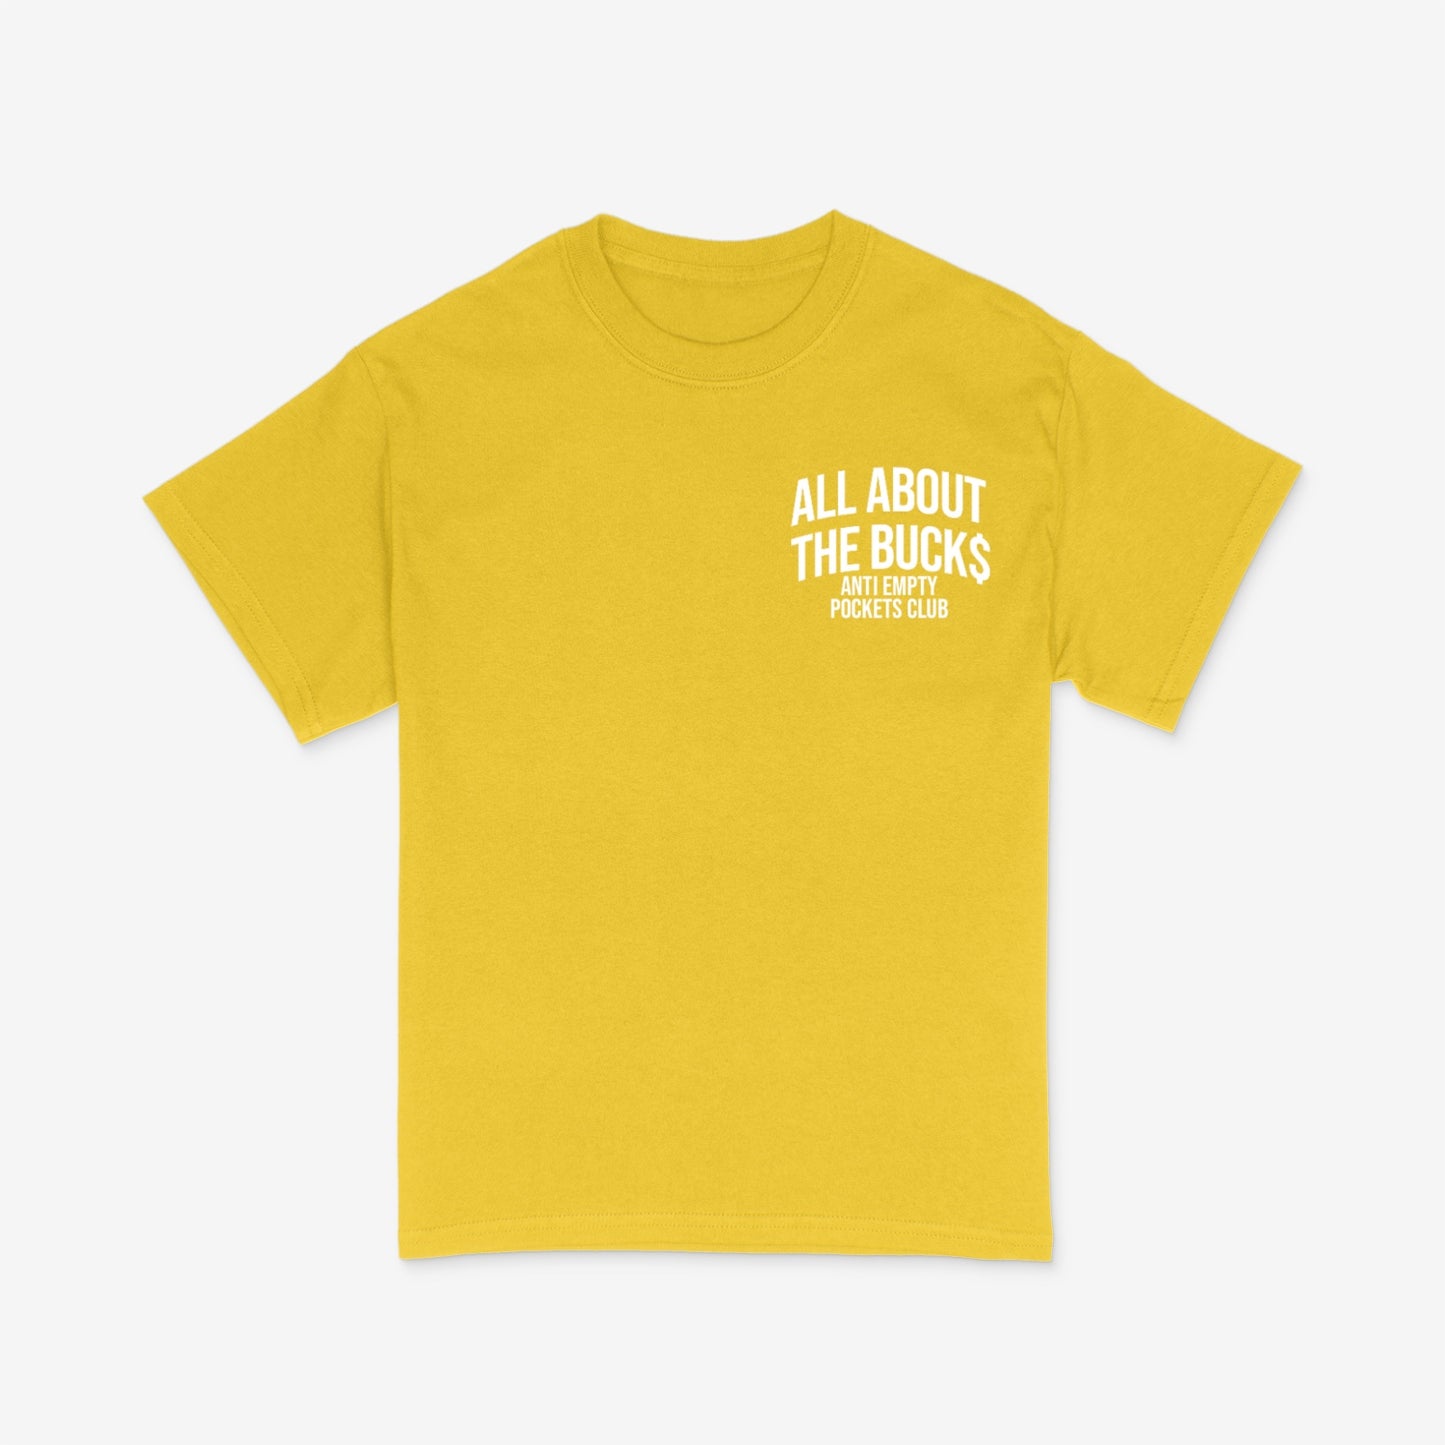 Anti Empty Pockets Club Yellow/White Shirt